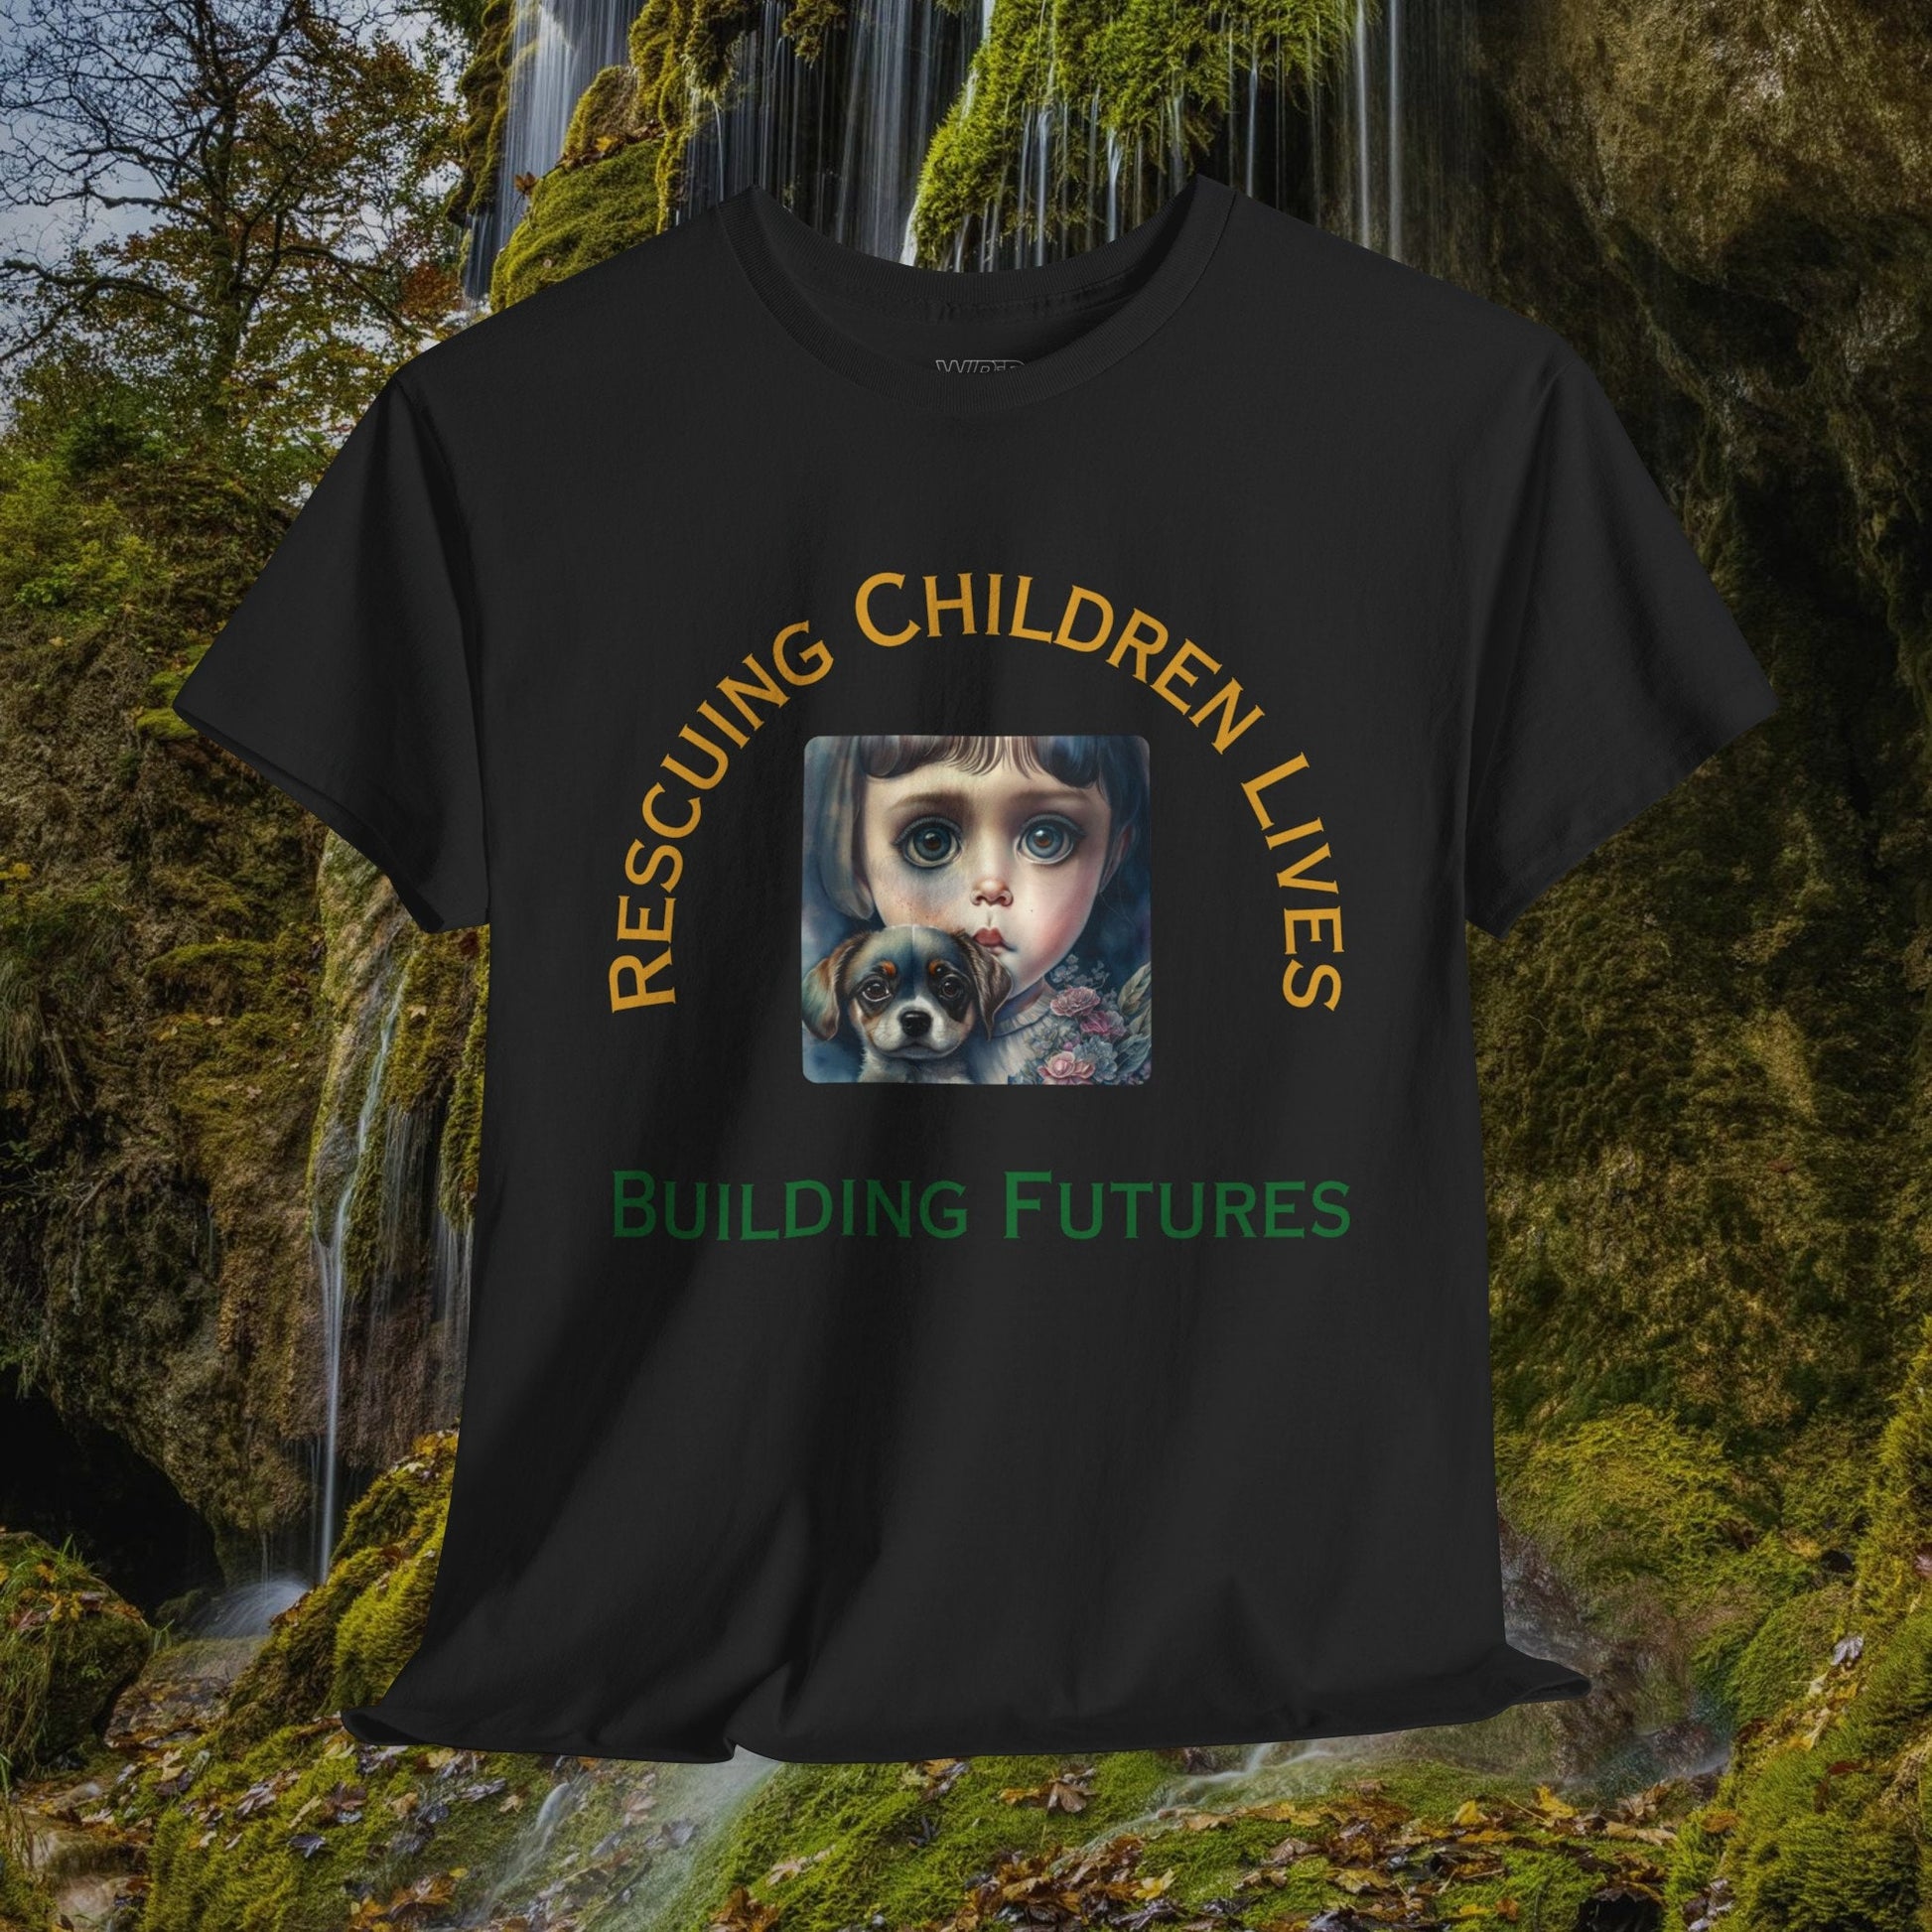 Rescue Children Live Shirt Gift, Stop War